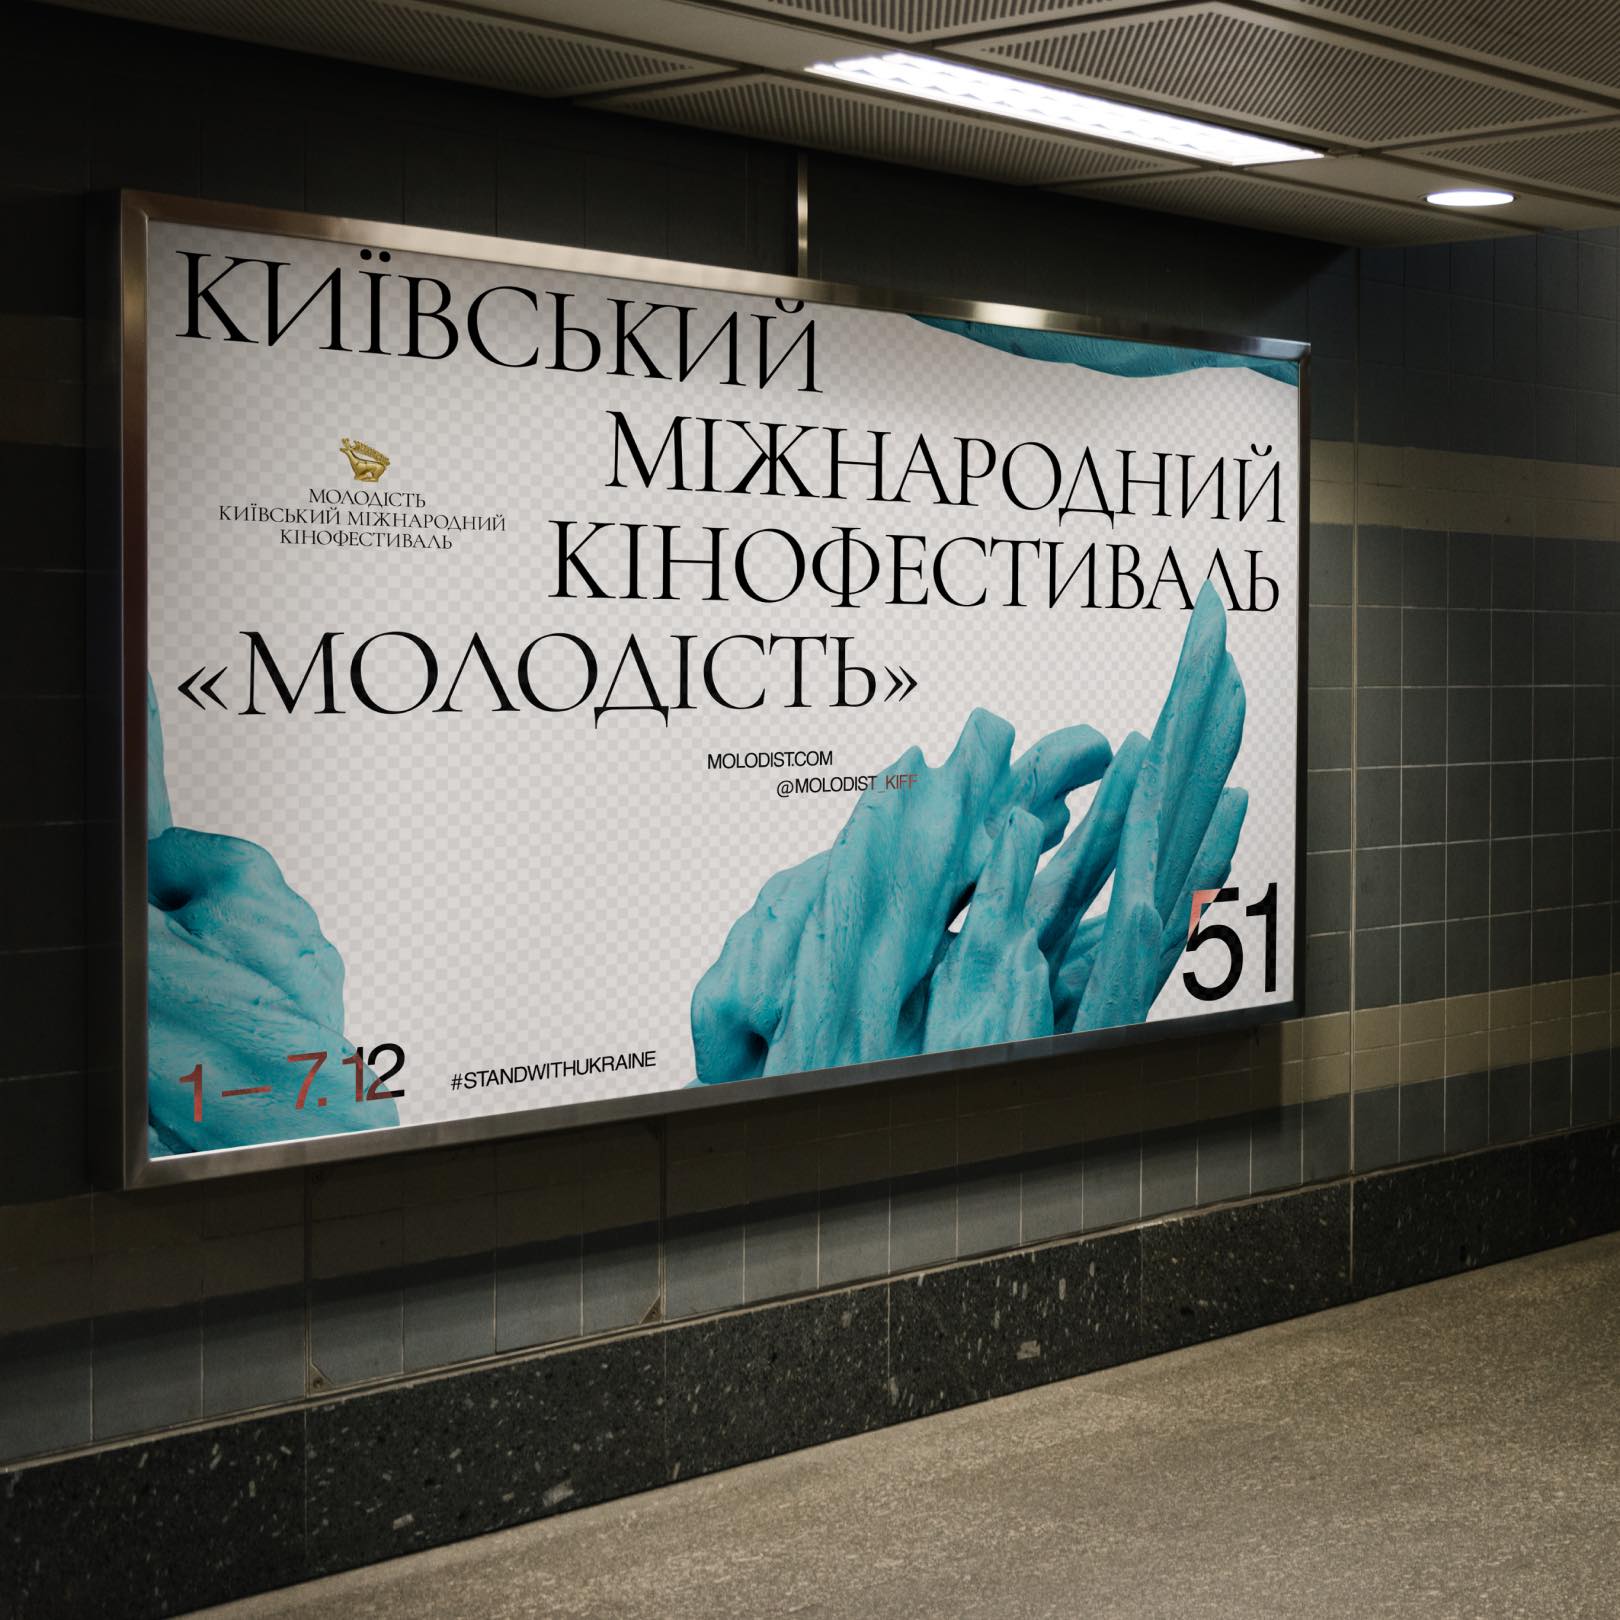 The 51st Molodist Kyiv International Film Festival